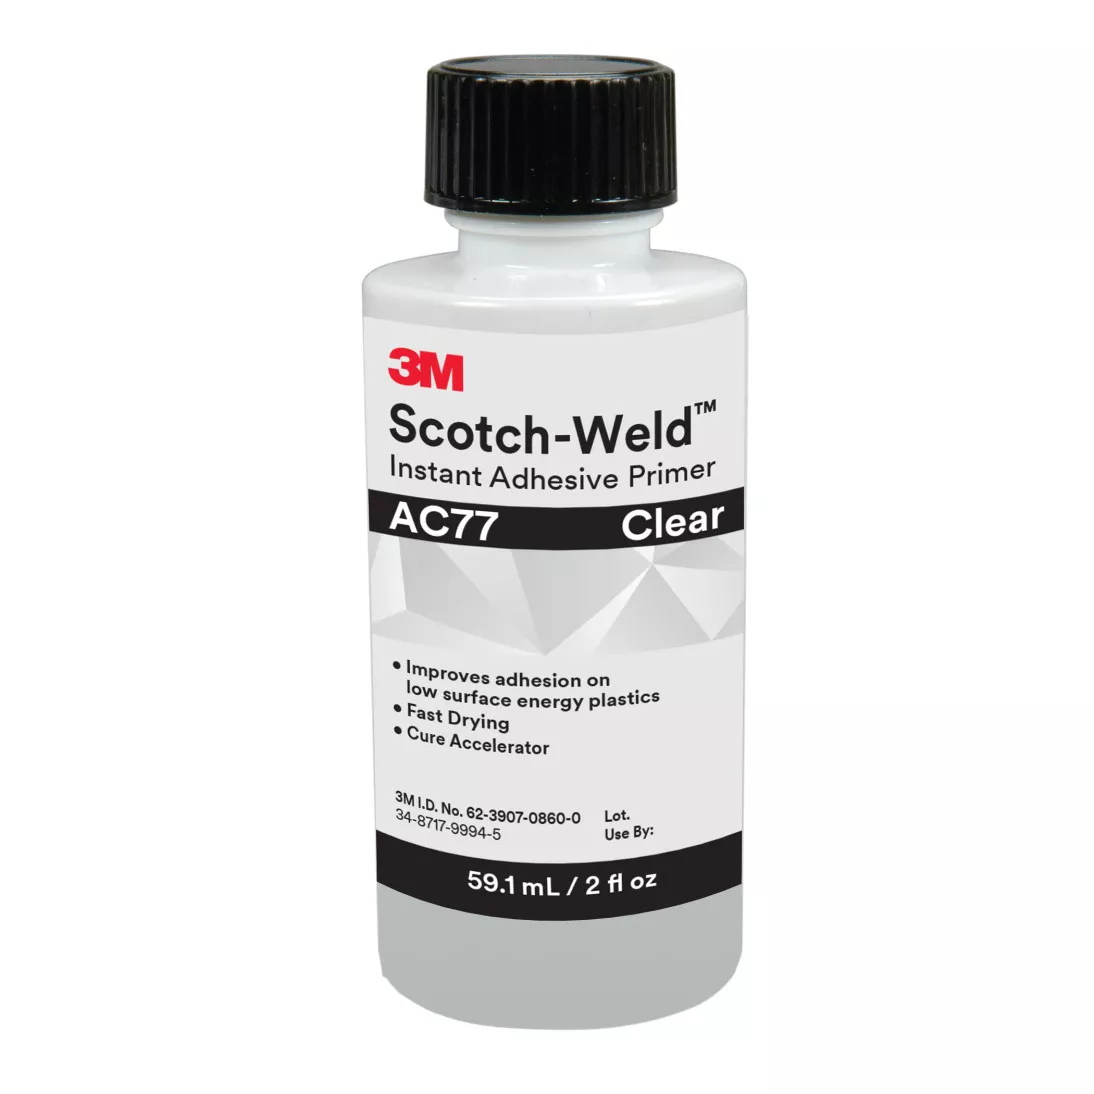 3M™ Scotch-Weld™ Instant Adhesive Primer AC77, Clear, 2 fl oz Bottle,
10/case